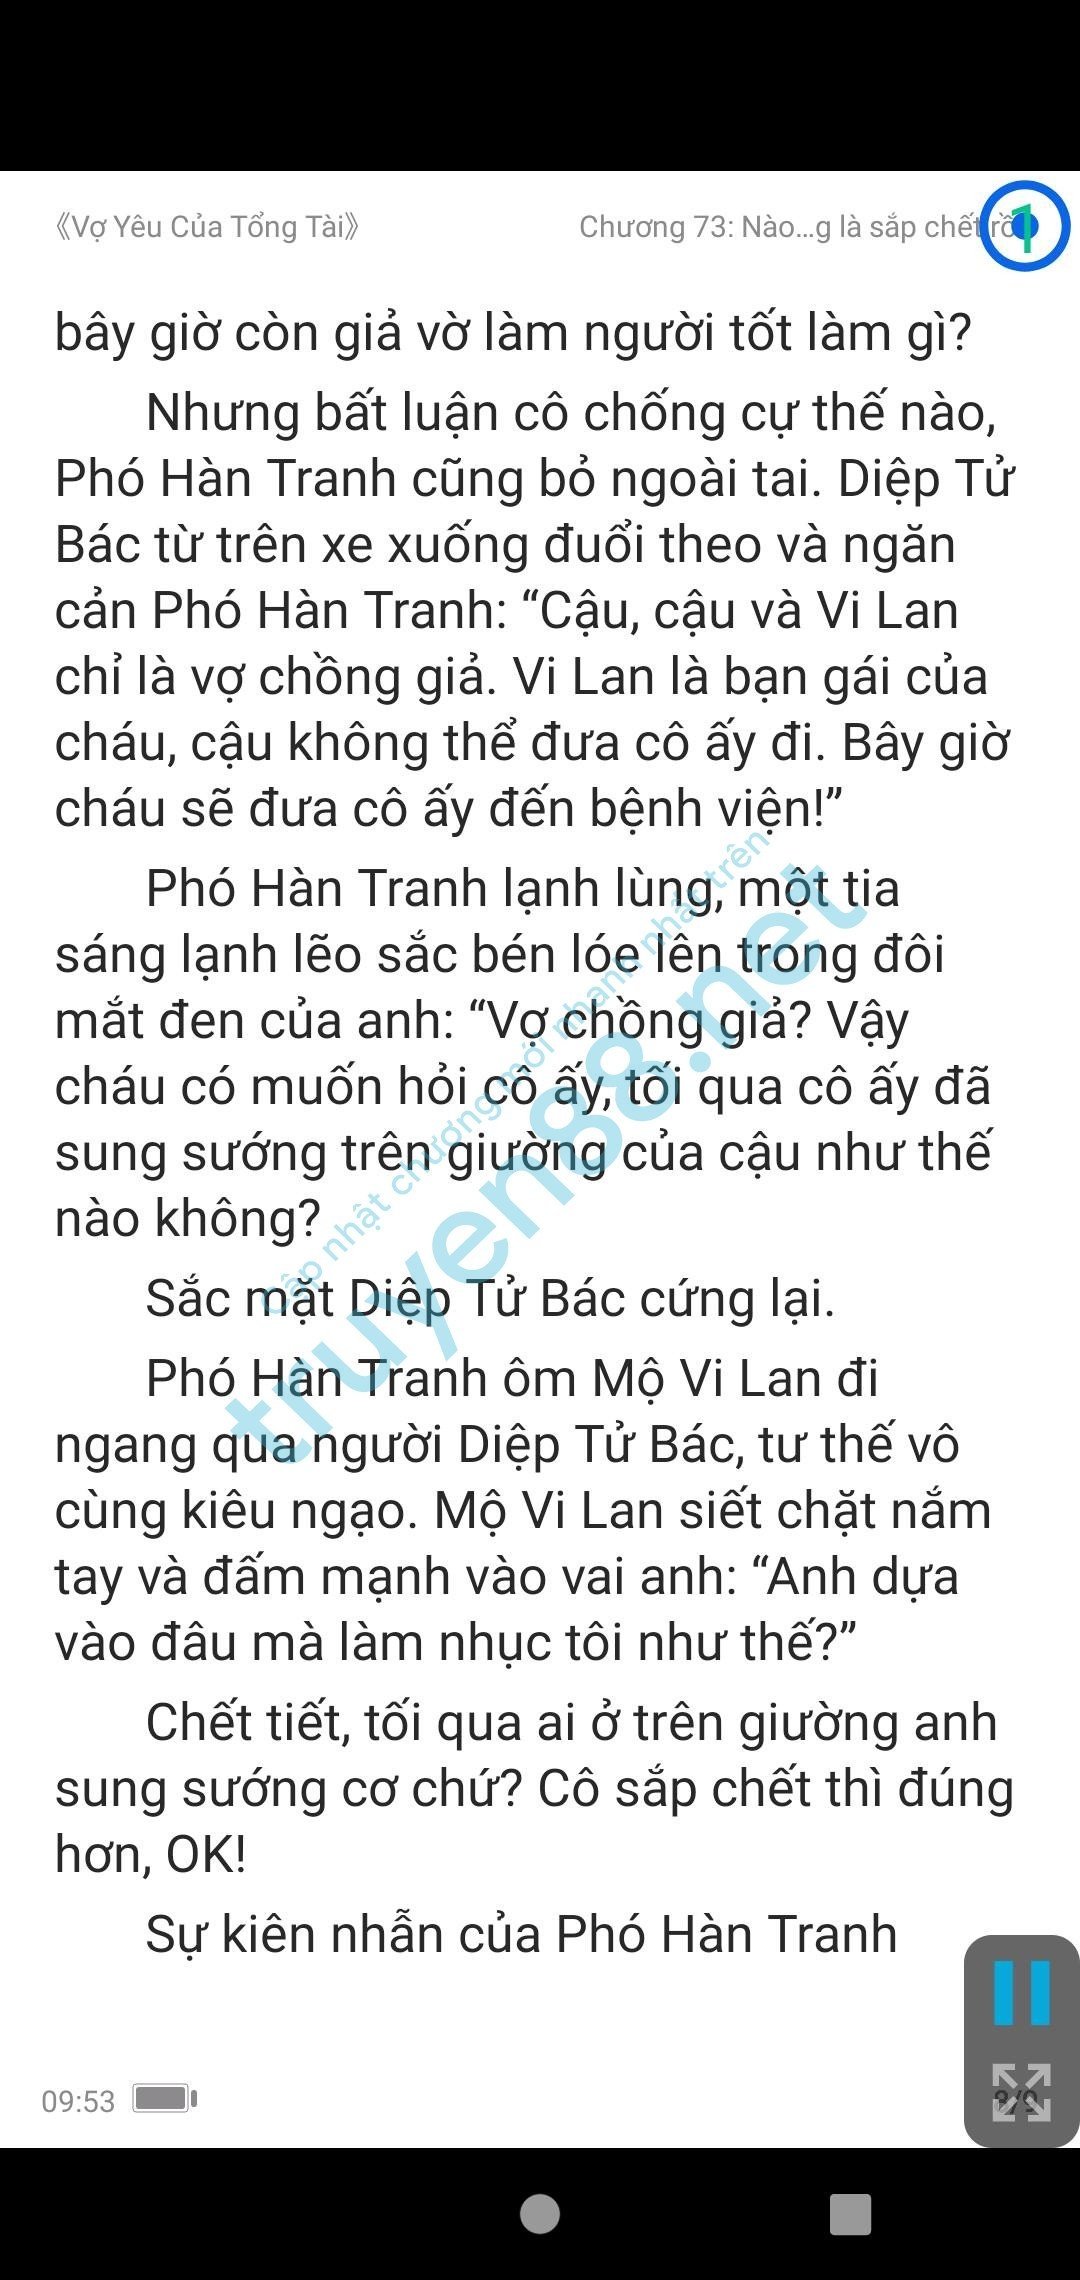 vo-yeu-cua-tong-tai-mo-vi-lan--pho-han-tranh-73-1